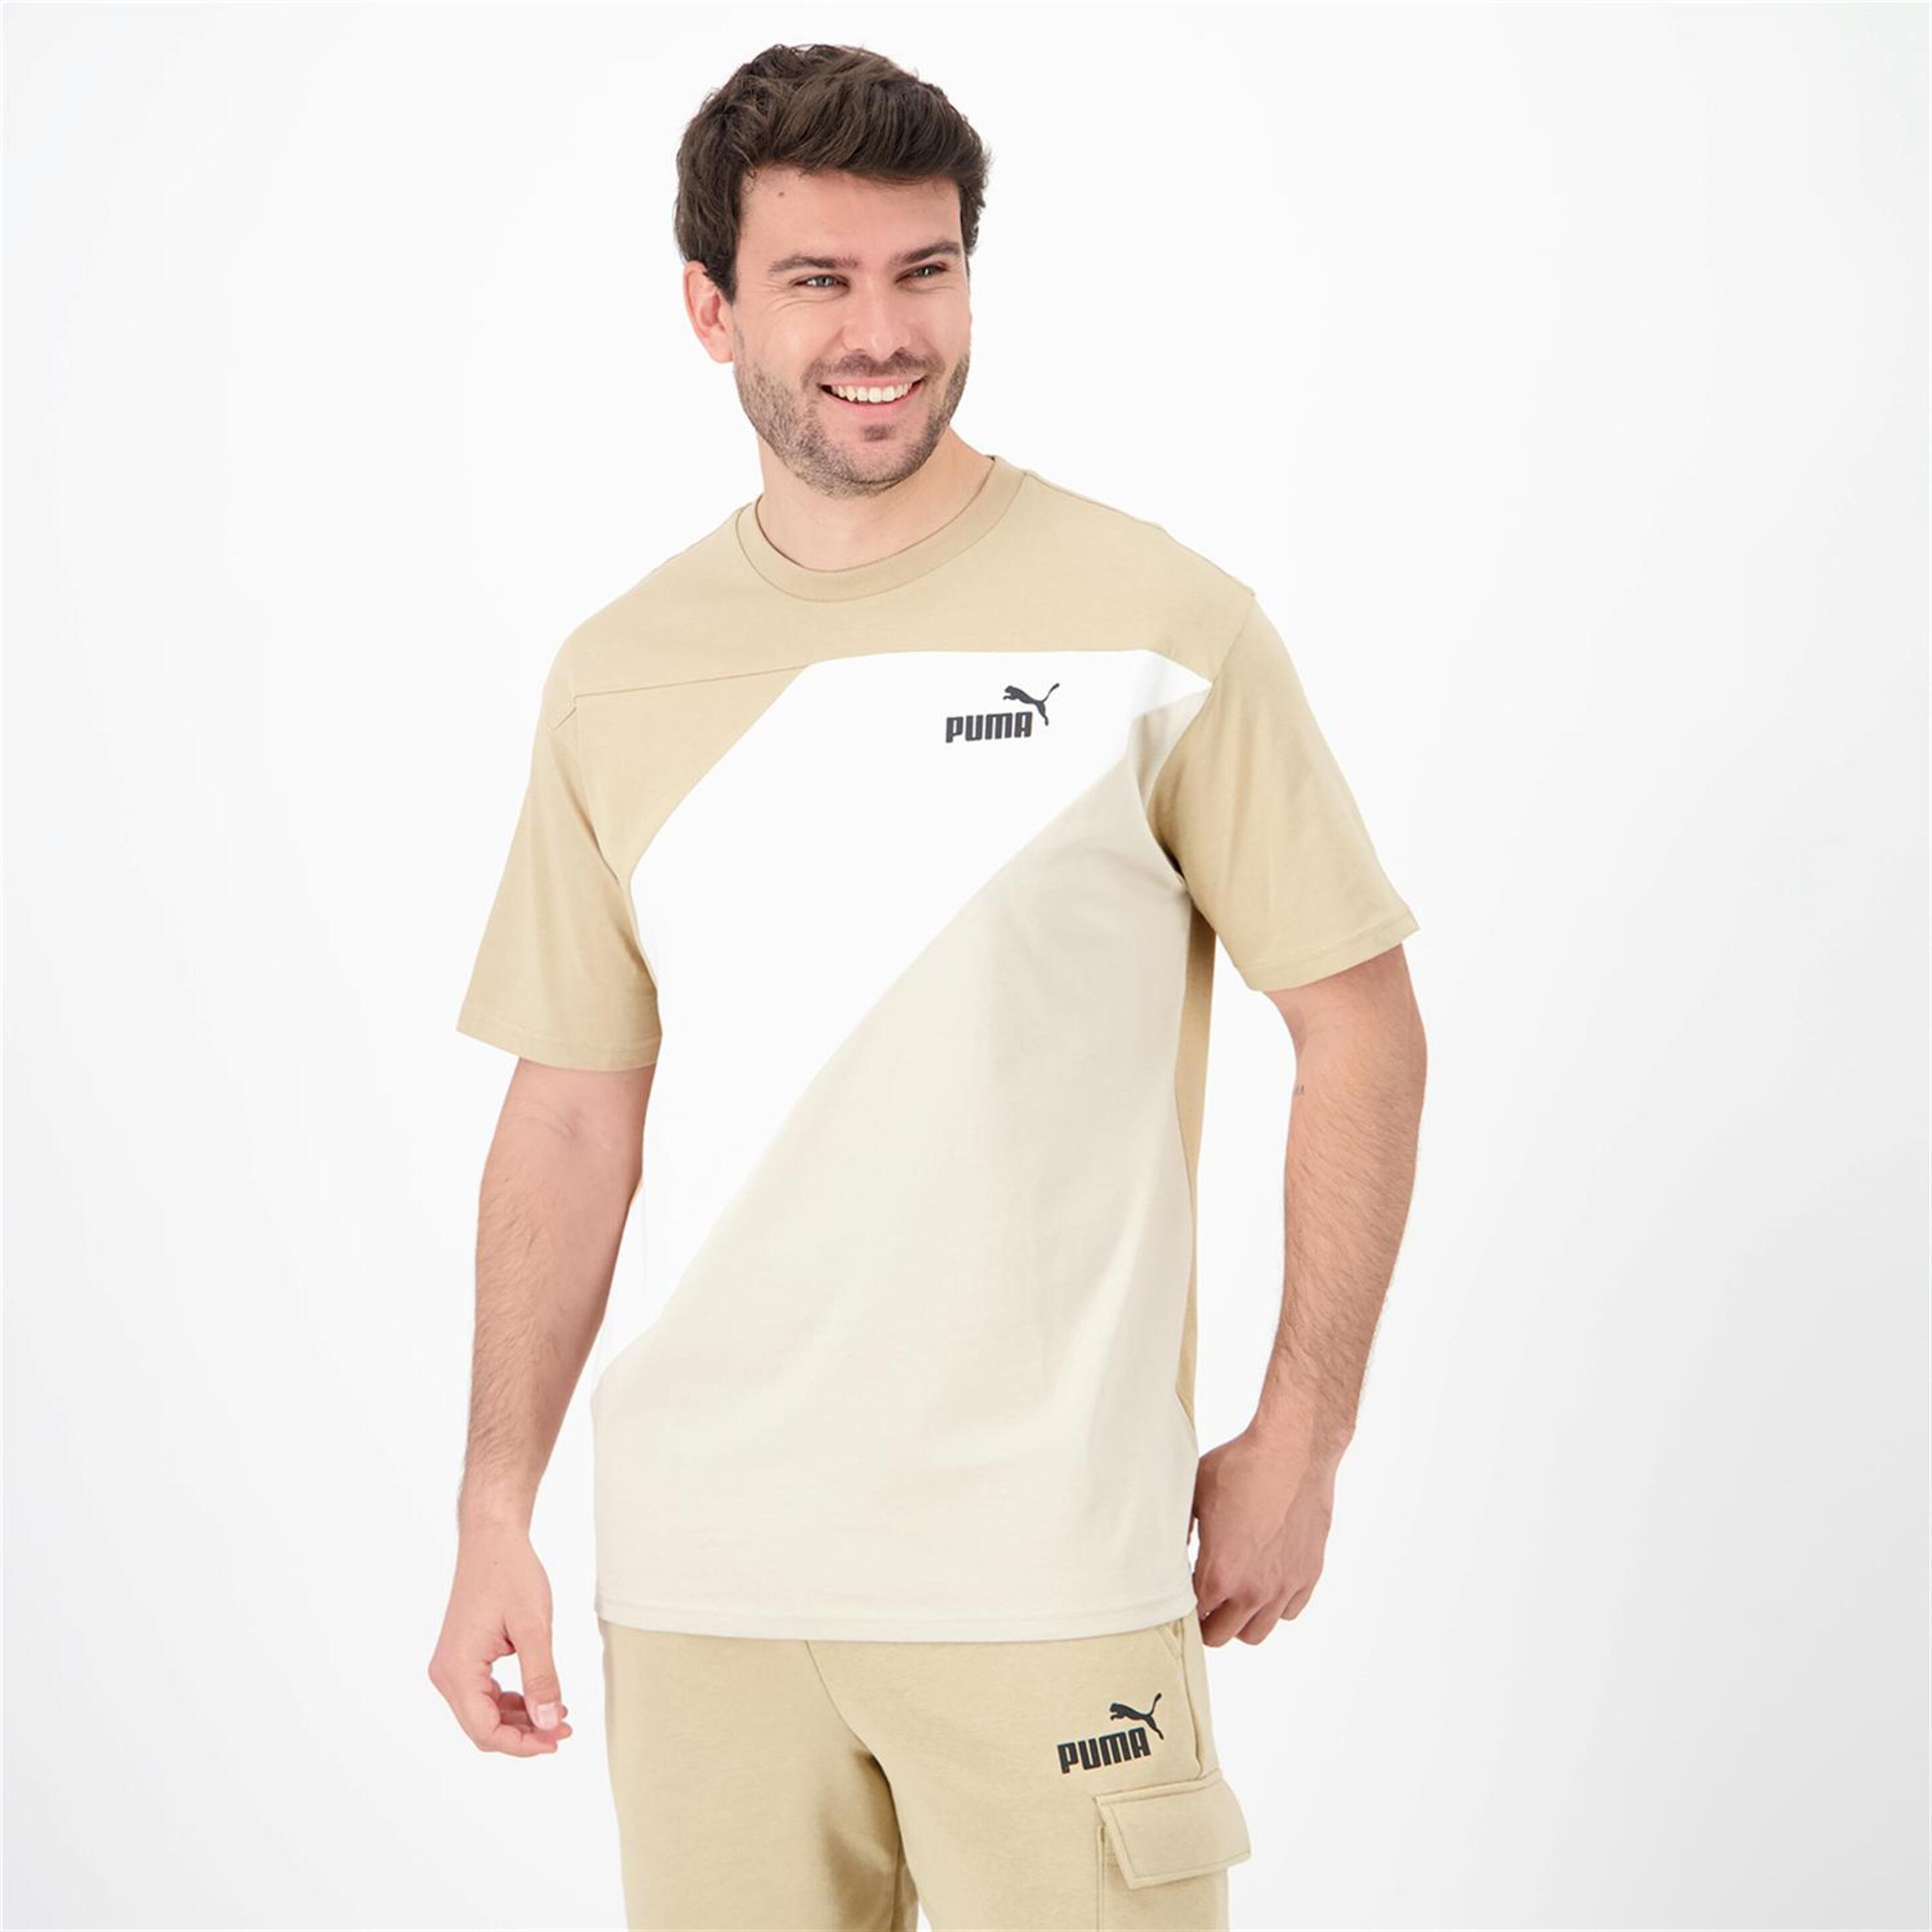 Puma Power Block - Arena - Camiseta Hombre